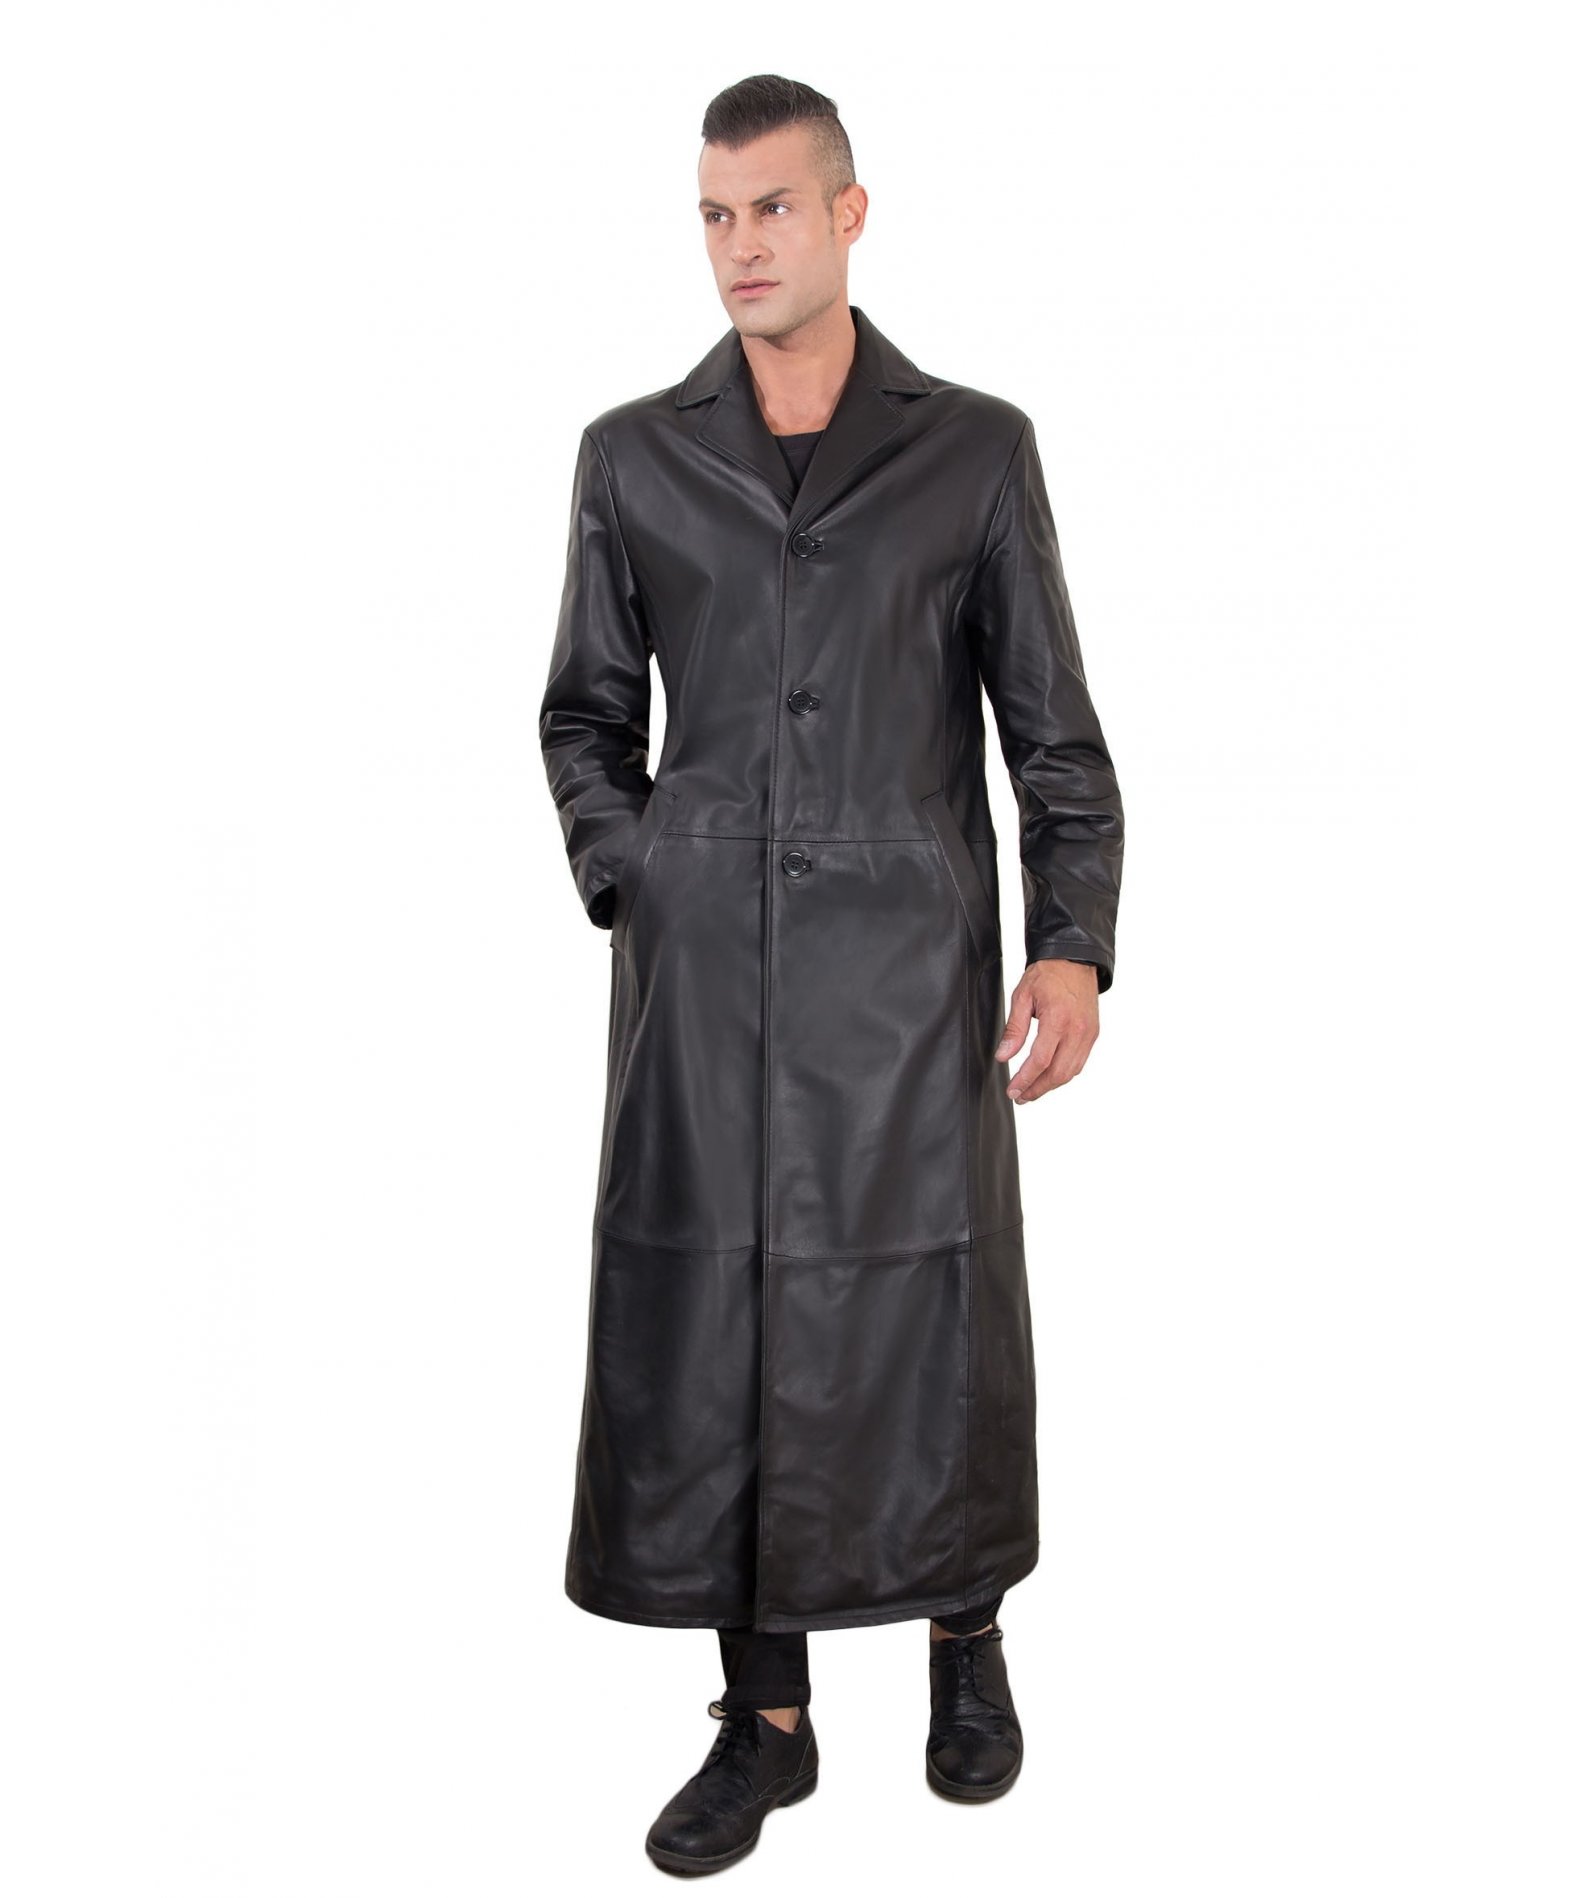 Men's long Leather coat genuine soft leather 2 pockets buttons closing  black color 2299 Matrix